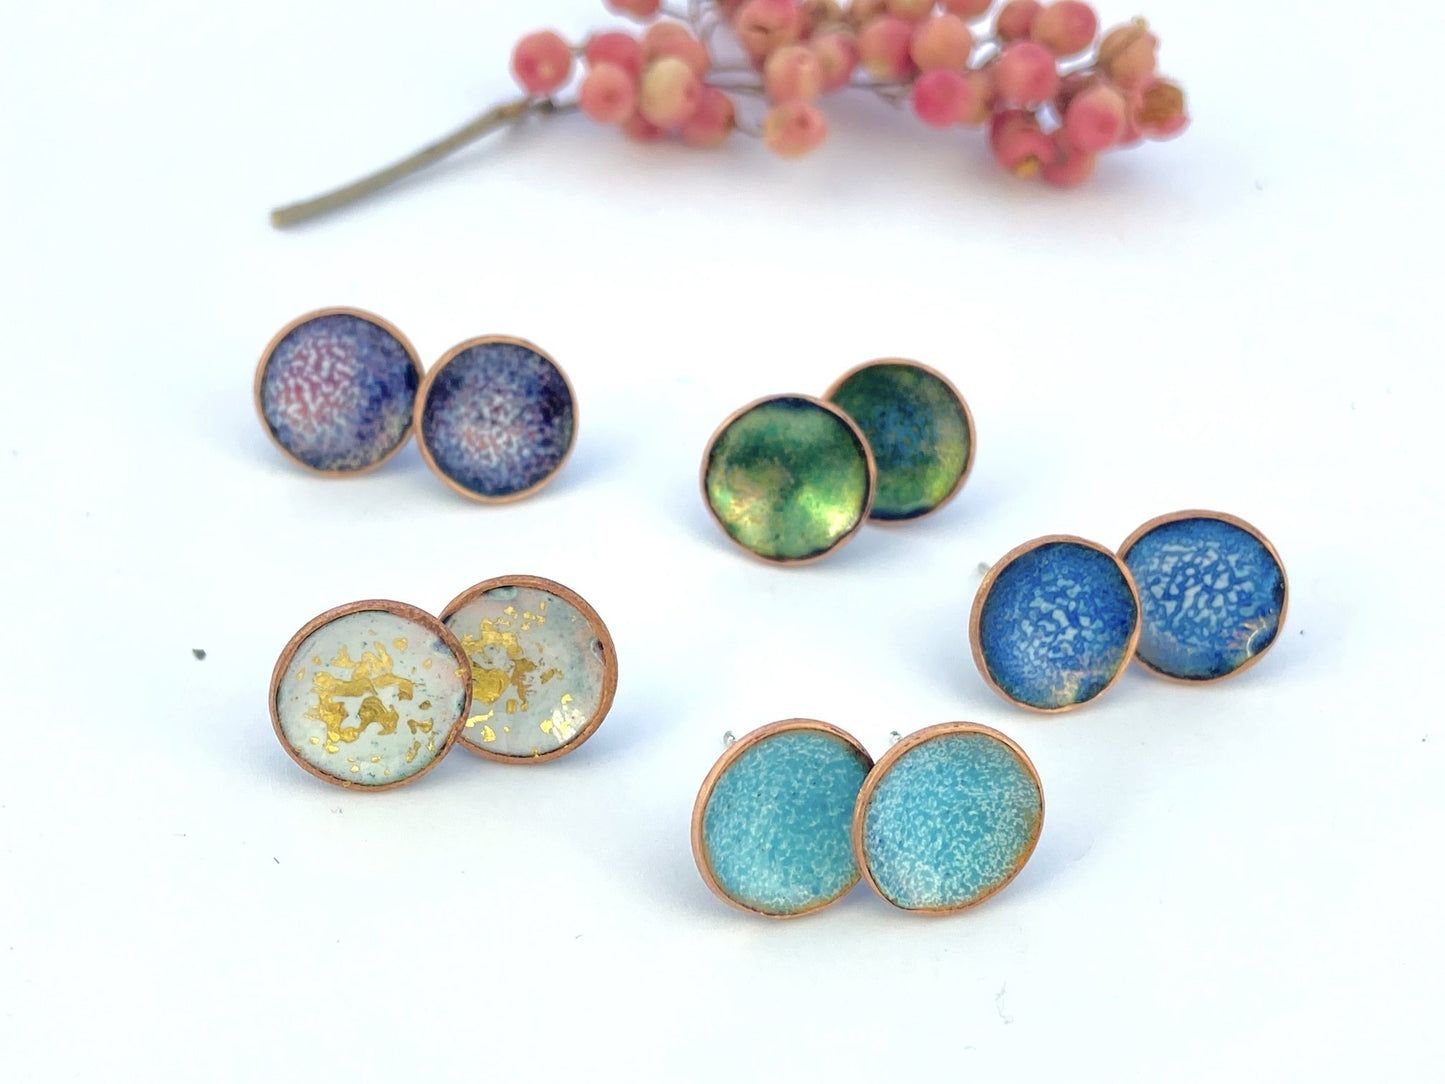 Expansion Enamel stud ‘Bowl’ earrings - turquoise - Katie Johnston Jewellery